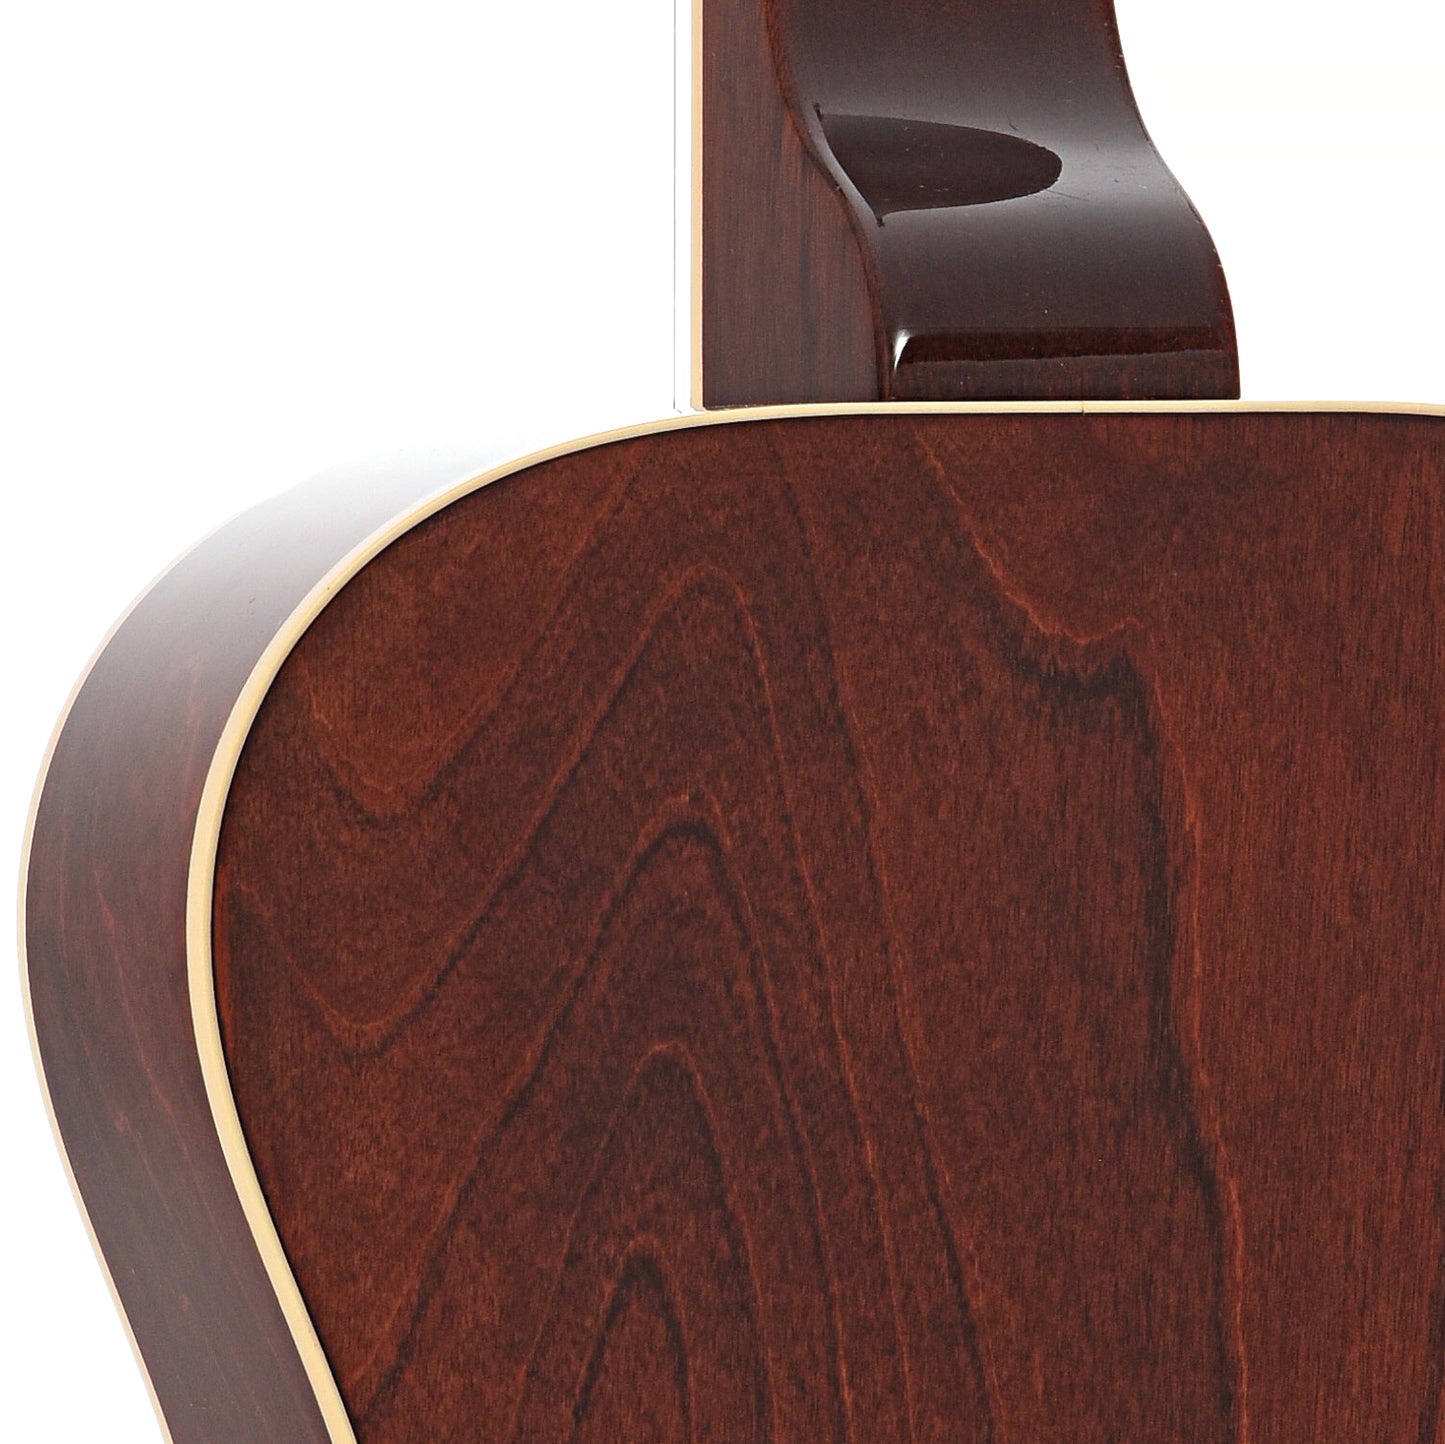 Heel of Beard Vintage R Squareneck Resonator Guitar